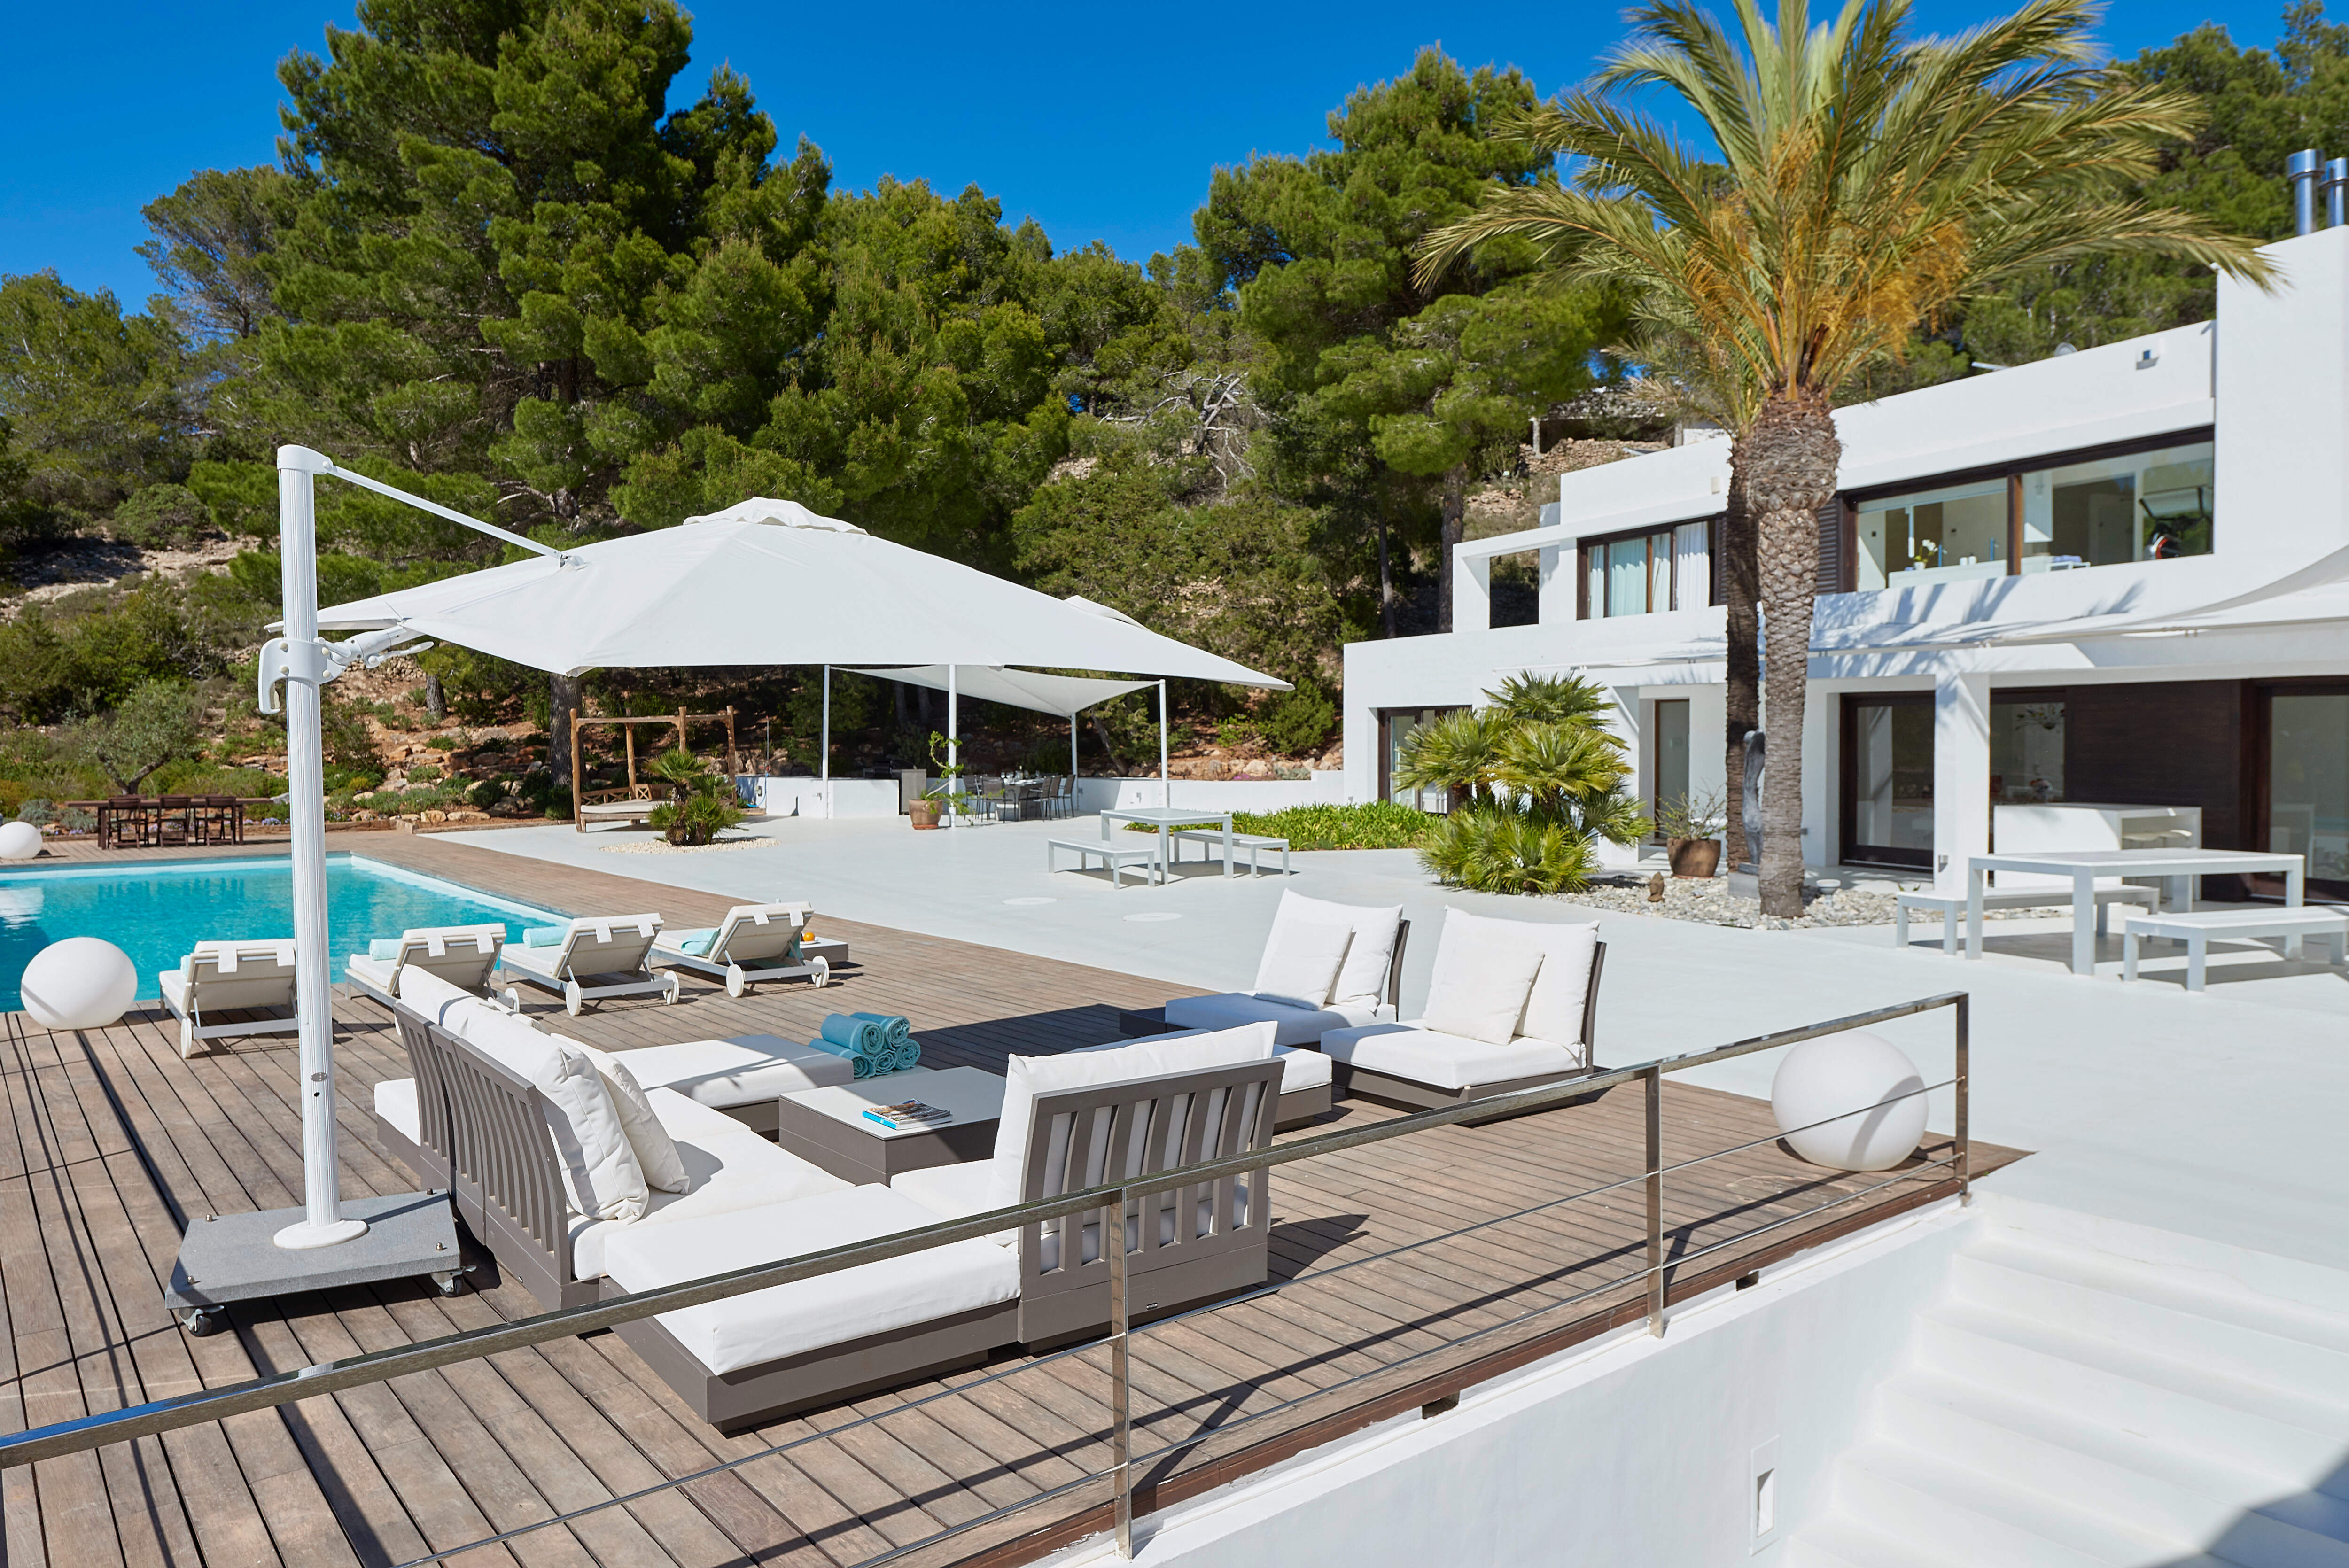 Maria schipper meloen Ibiza rentals : our luxury villas & modern fincas - Le Collectionist